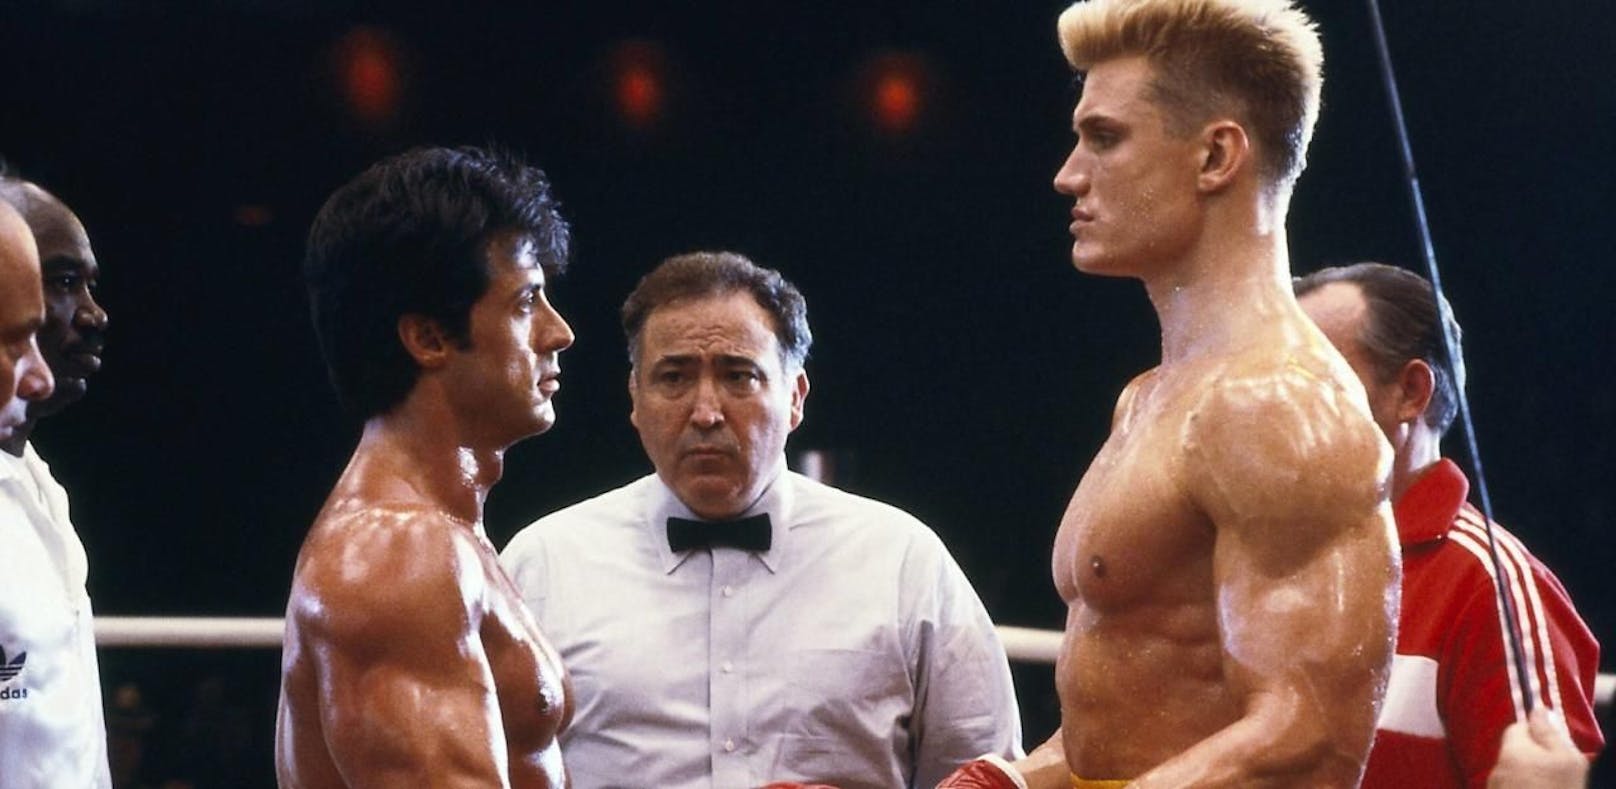 Kämpft Rocky in  "Creed 2" wieder gegen Ivan Drago?